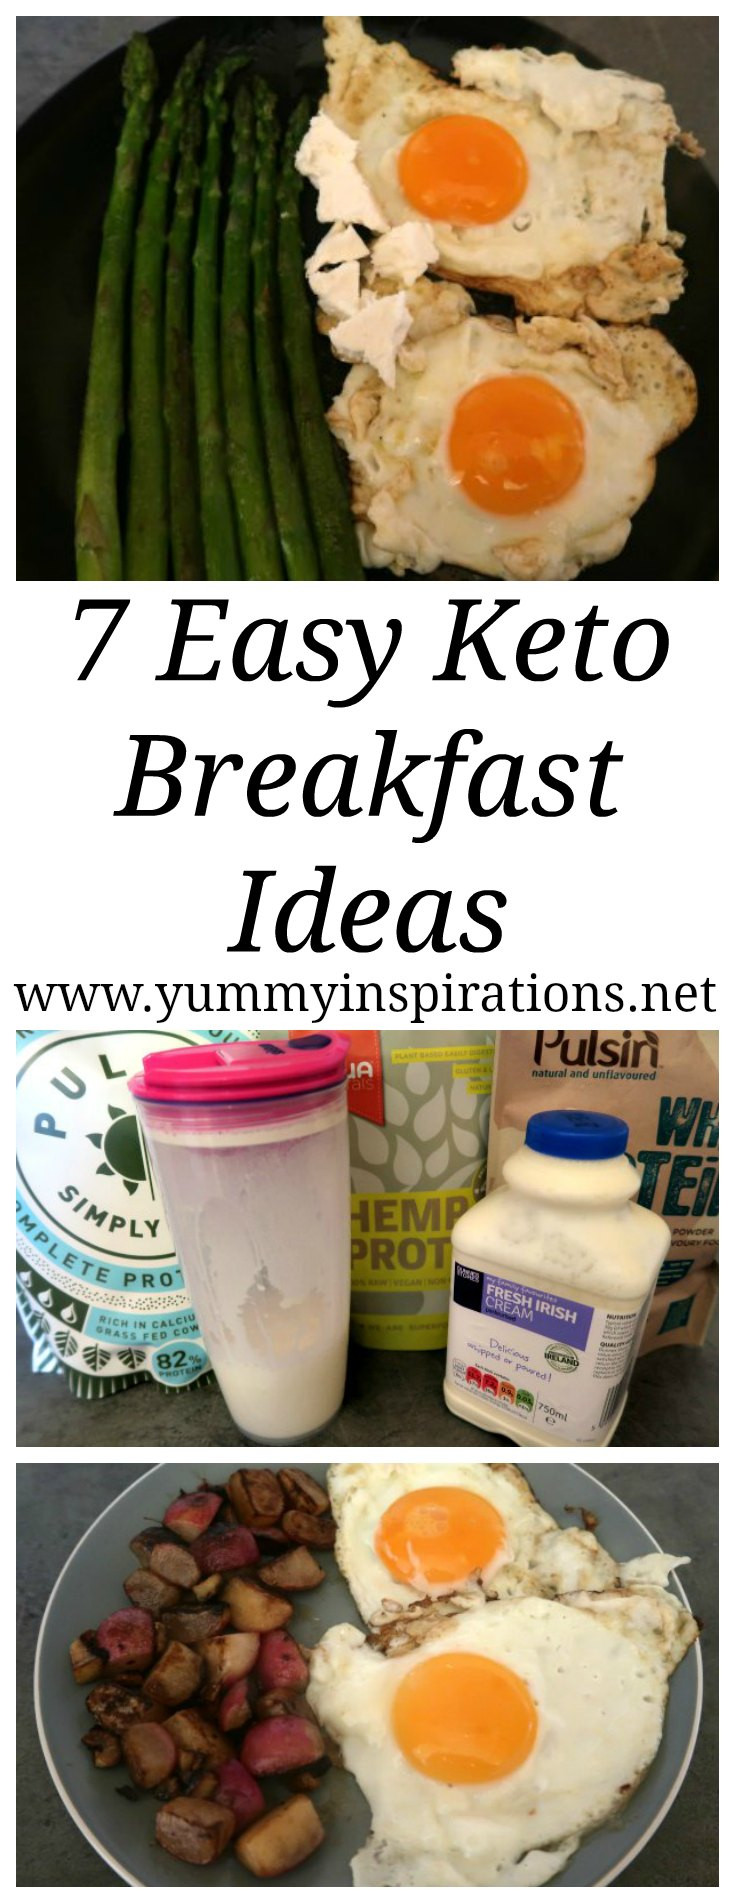 Ketosis Diet Recipes Breakfast
 7 Easy Keto Breakfast Ideas Low Carb & Ketogenic Diet